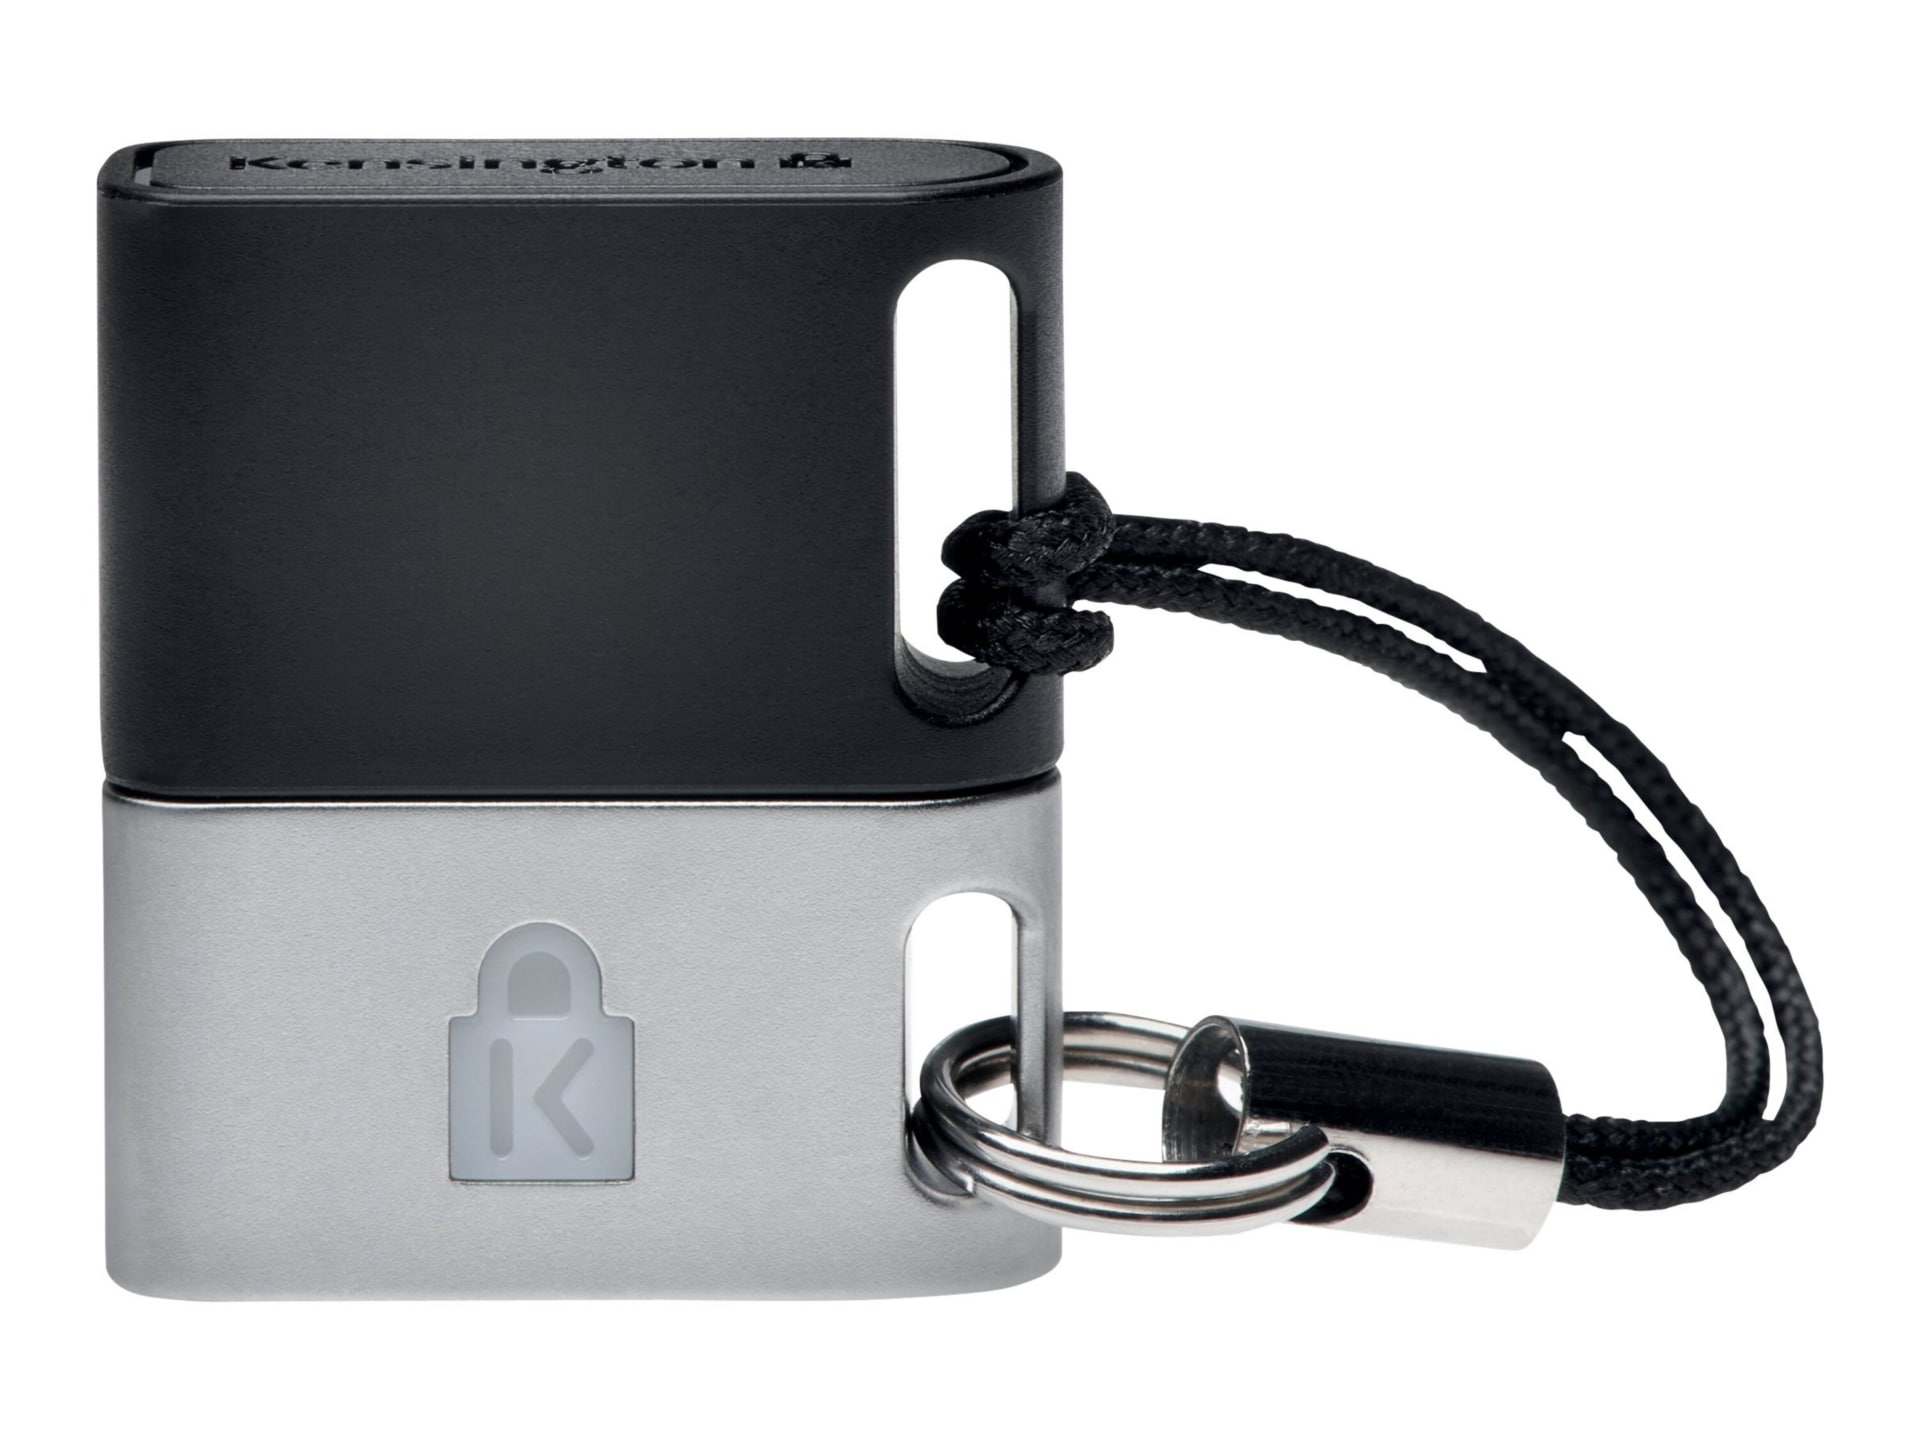 Kensington VeriMark Guard USB-C Fingerprint Key - FIDO2, WebAuthn/CTAP2, & FIDO U2F - Cross Platform fingerprint reader